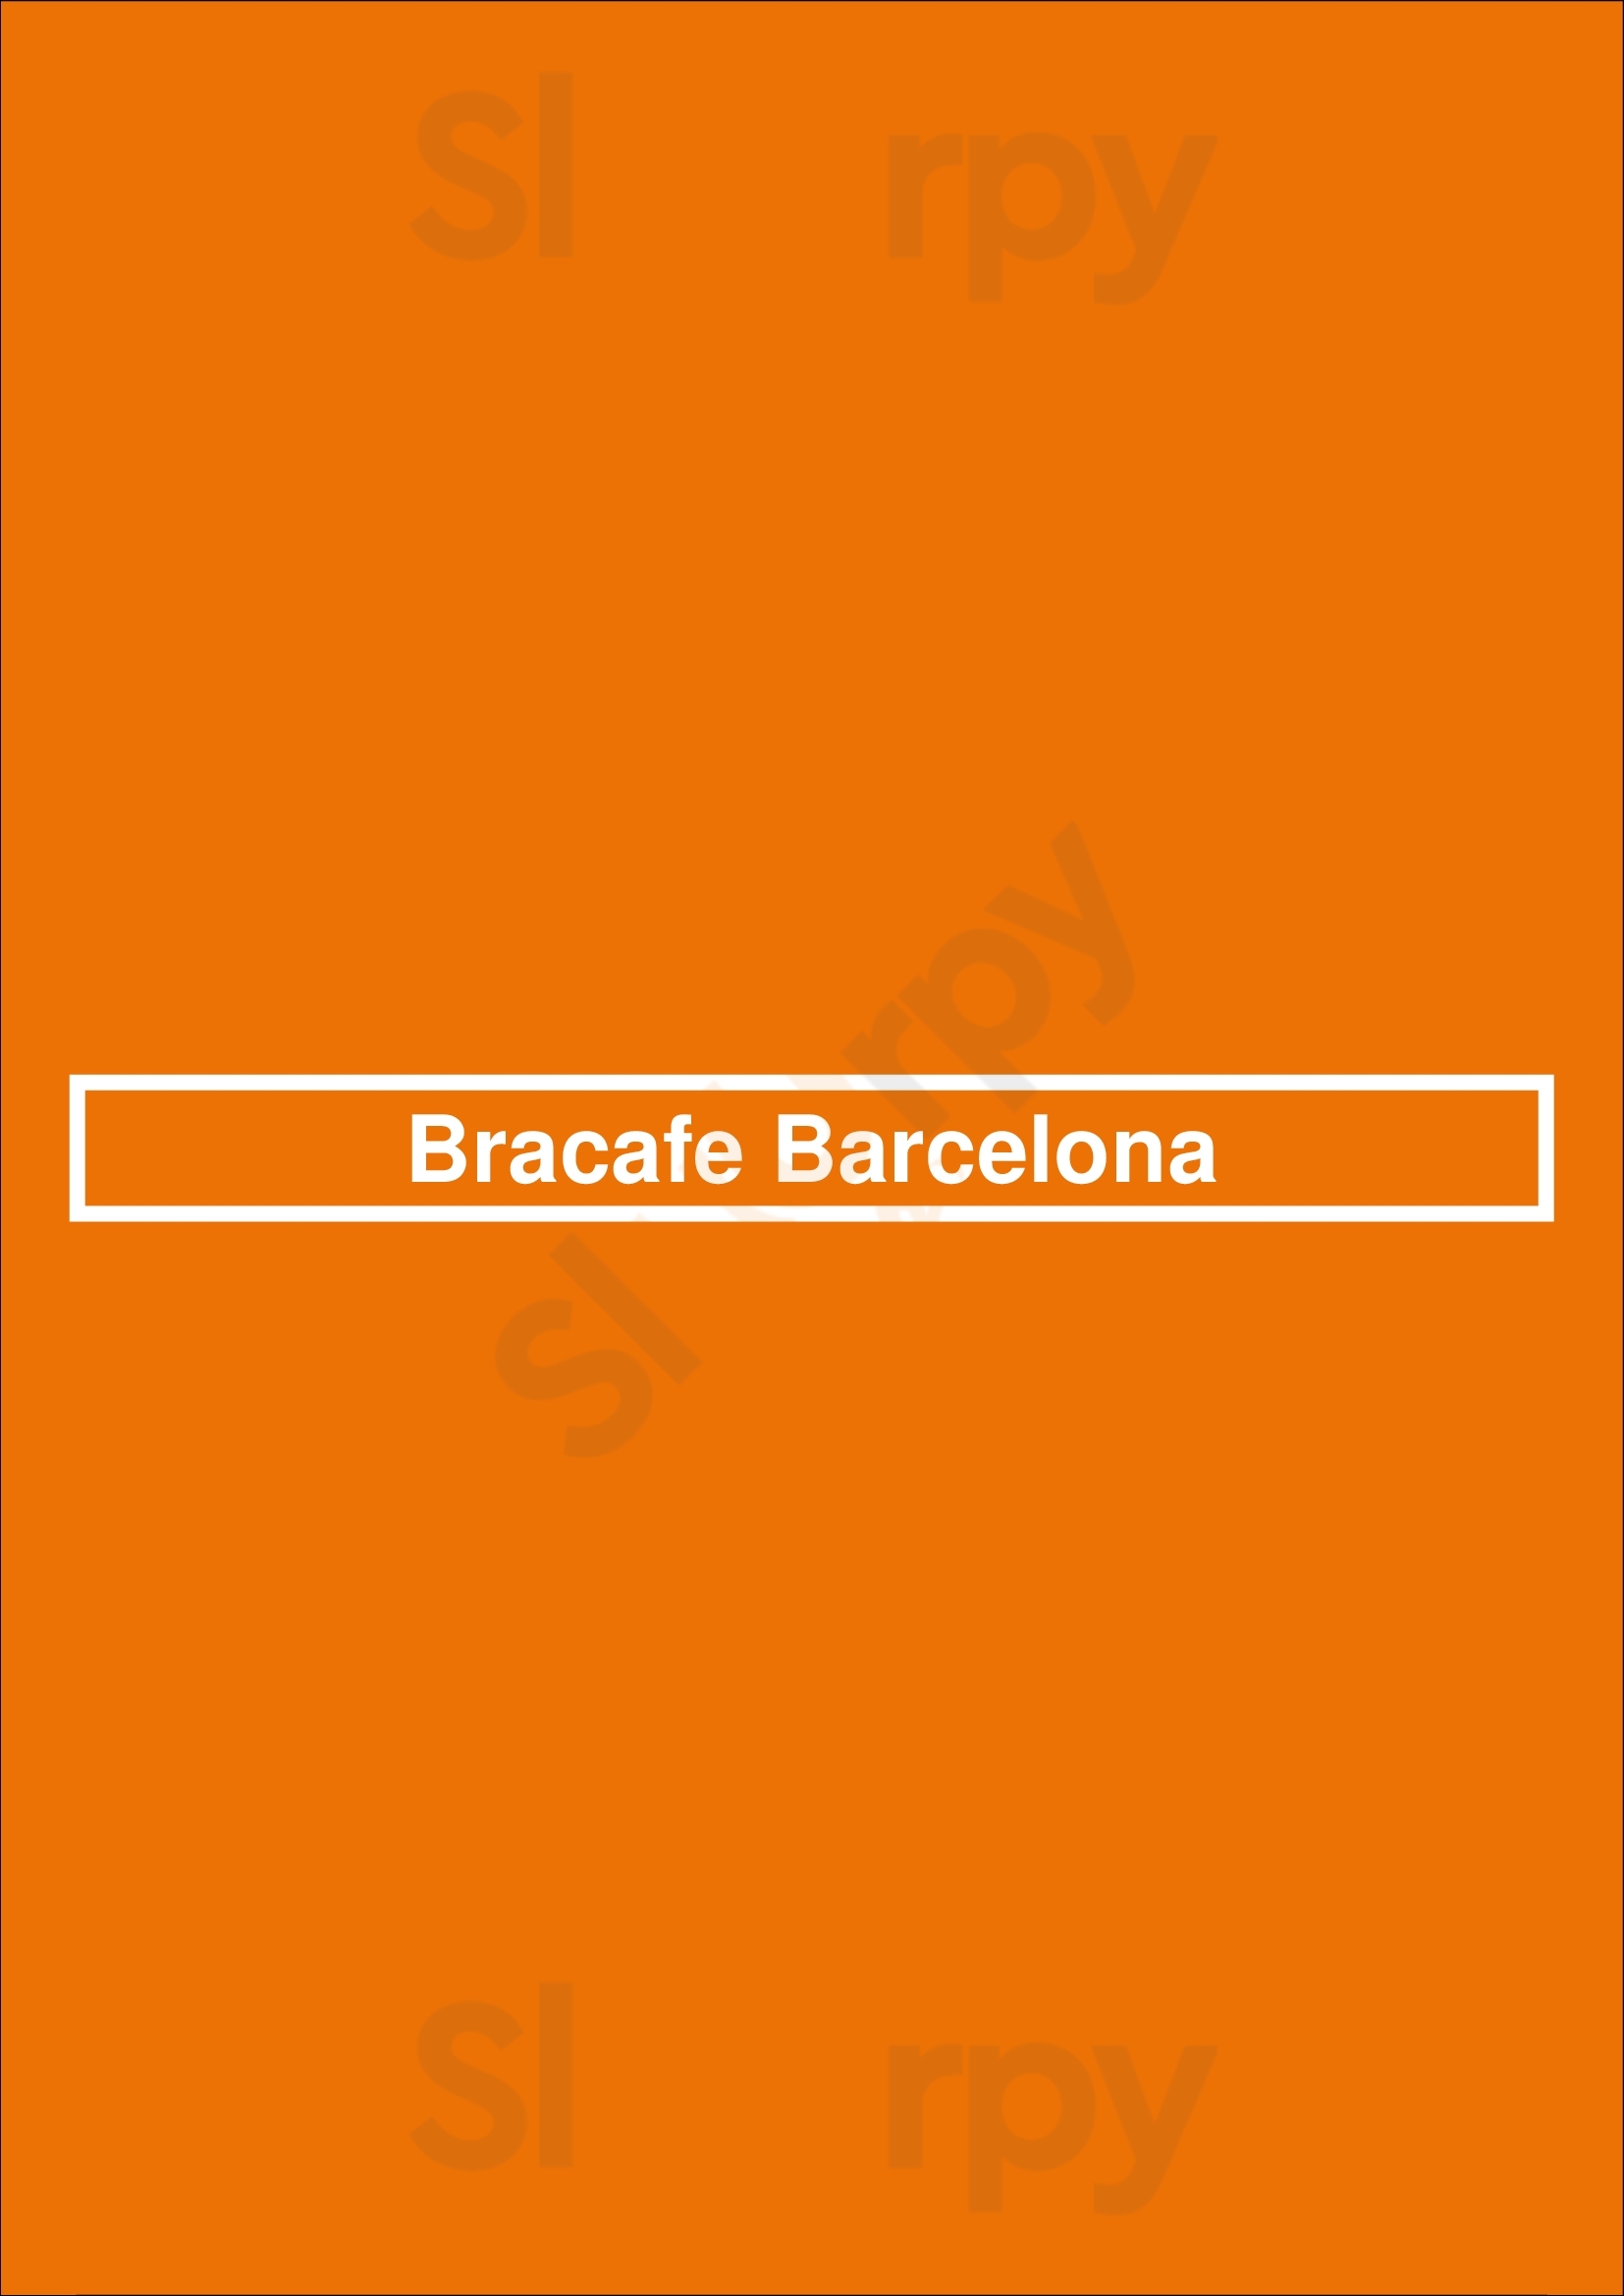 Bracafe Barcelona Barcelona Menu - 1